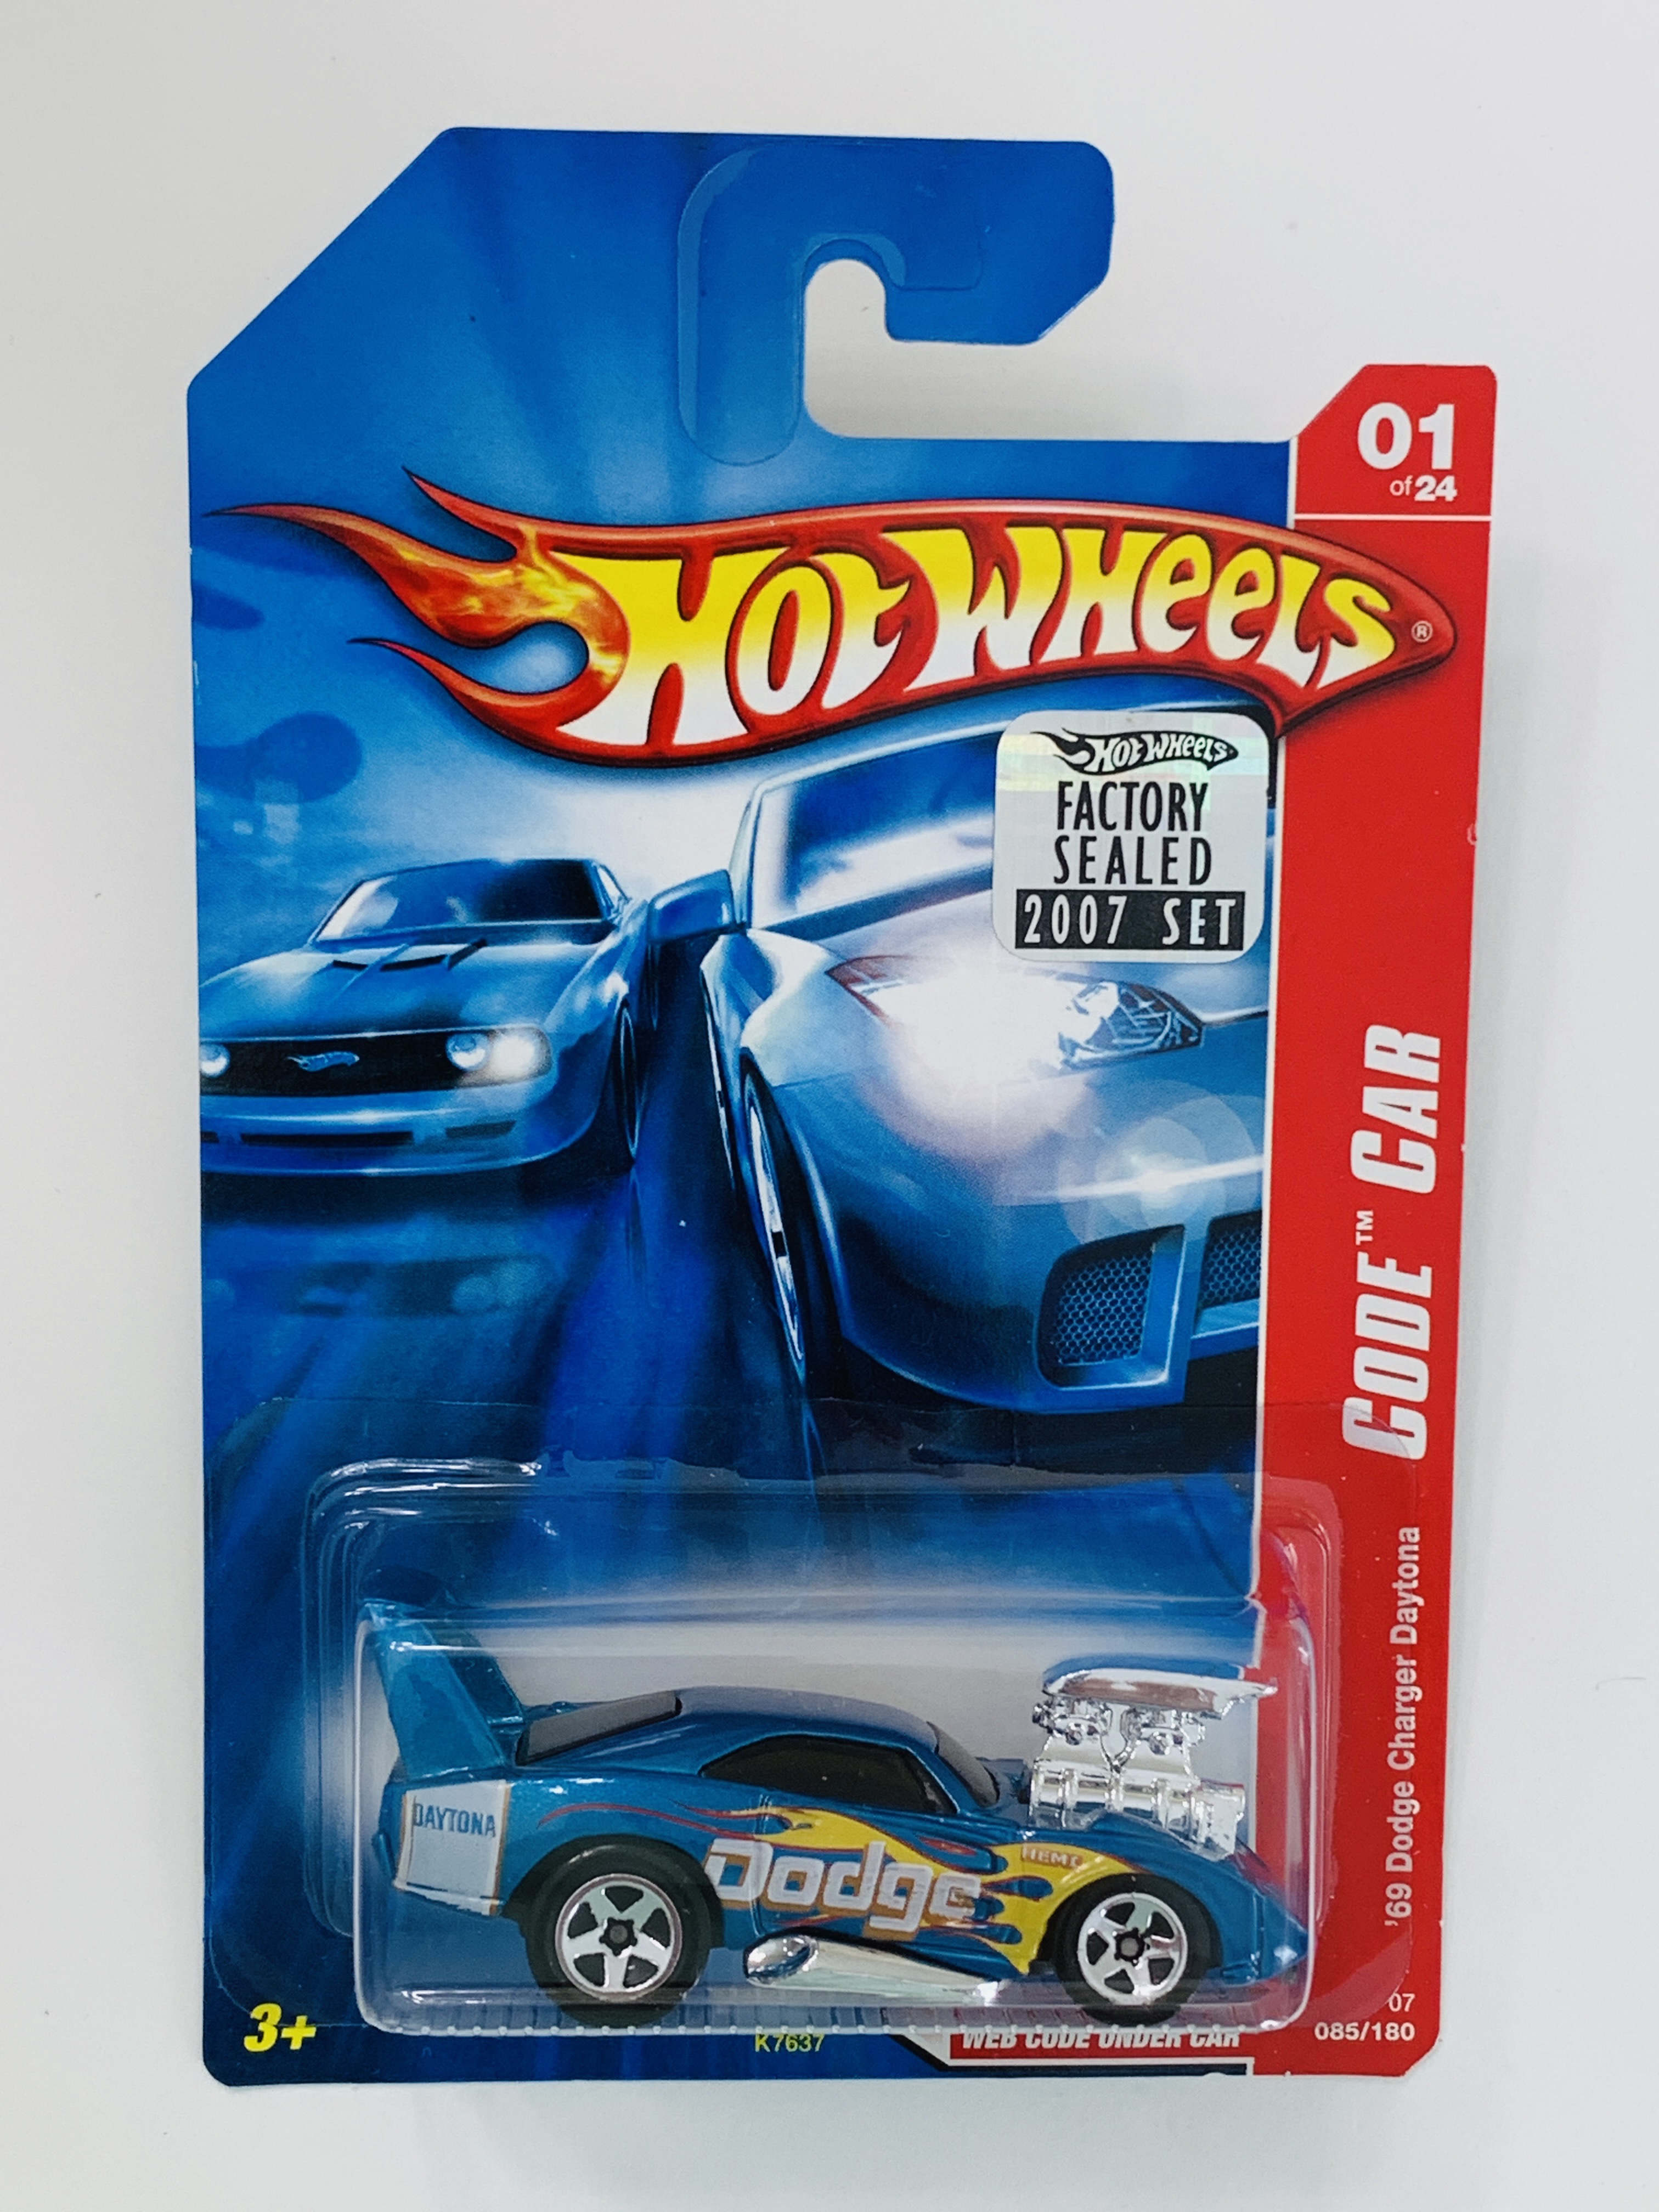 Hot Wheels 2007 Factory Set #085 '69 Dodge Charger Daytona - Blue